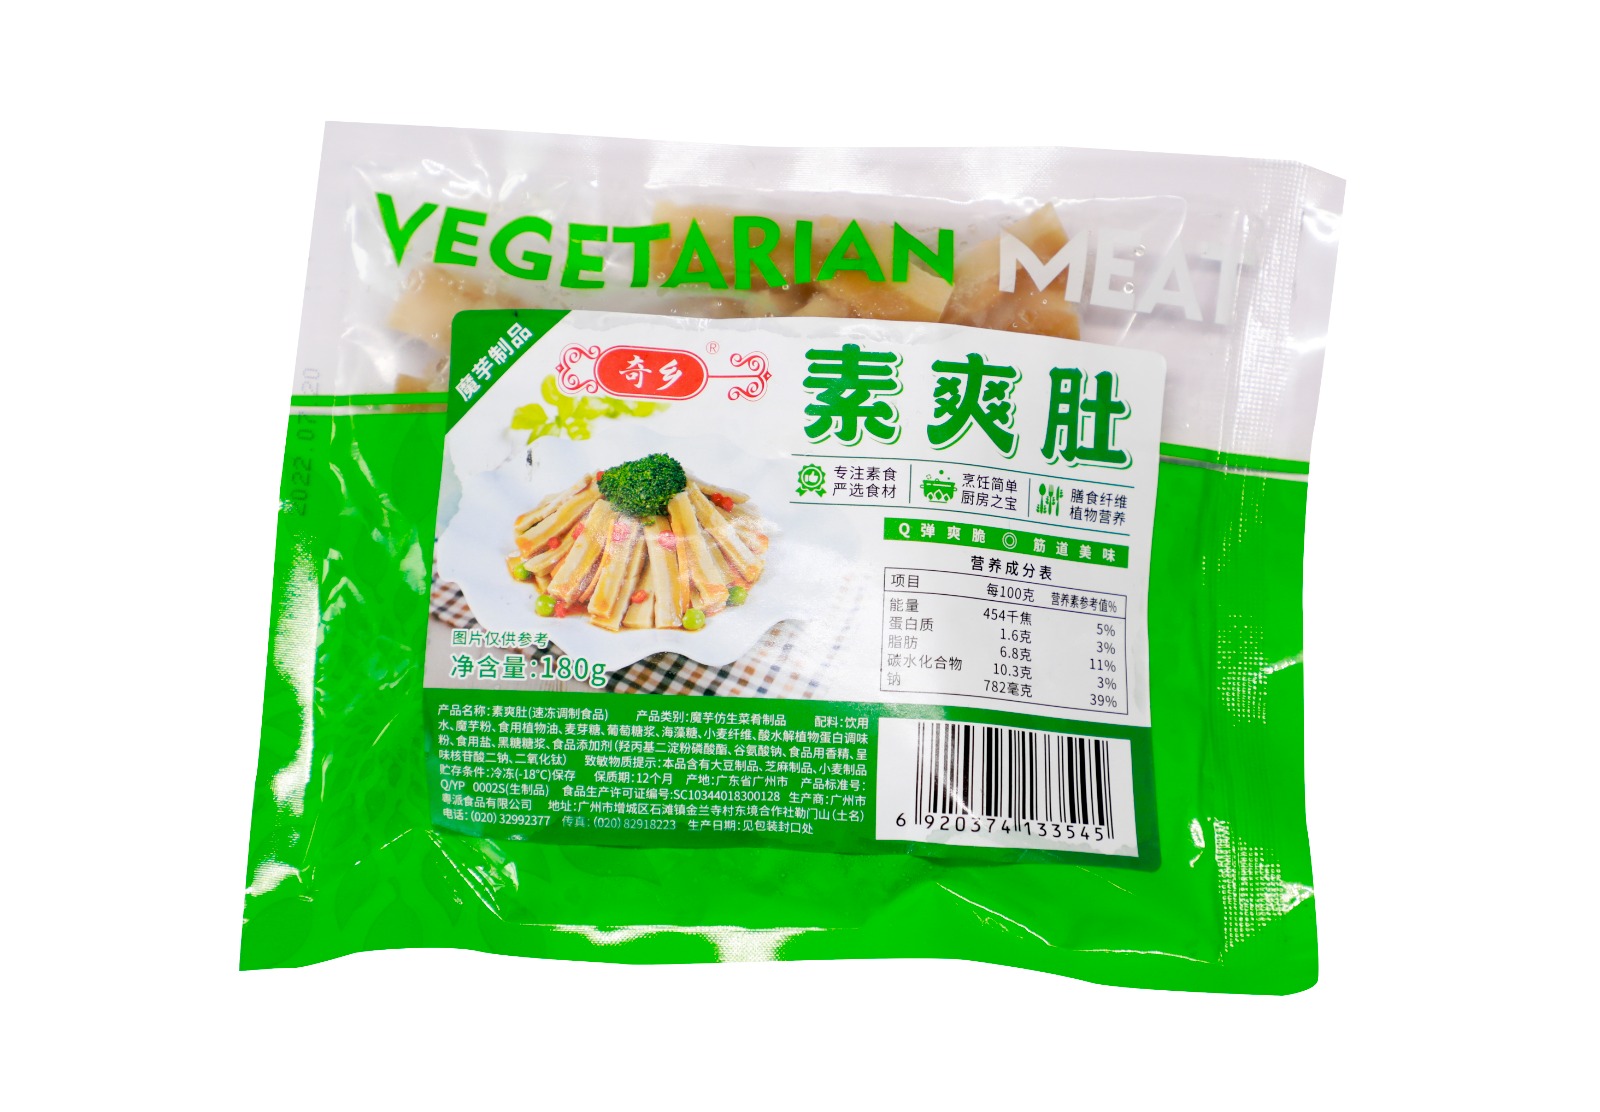 Image <a title="Qi Xiang Vegetarian Pork Tripe 素肚爽 素朱肚 180 grams" href="https://www.friendlyvegetarian.com.sg/product/1901/qi-xiang-vegetarian-pork-tripe-180-grams">Qi Xiang Vegetarian Pork Tripe 素肚爽 素朱肚 180 grams</a>